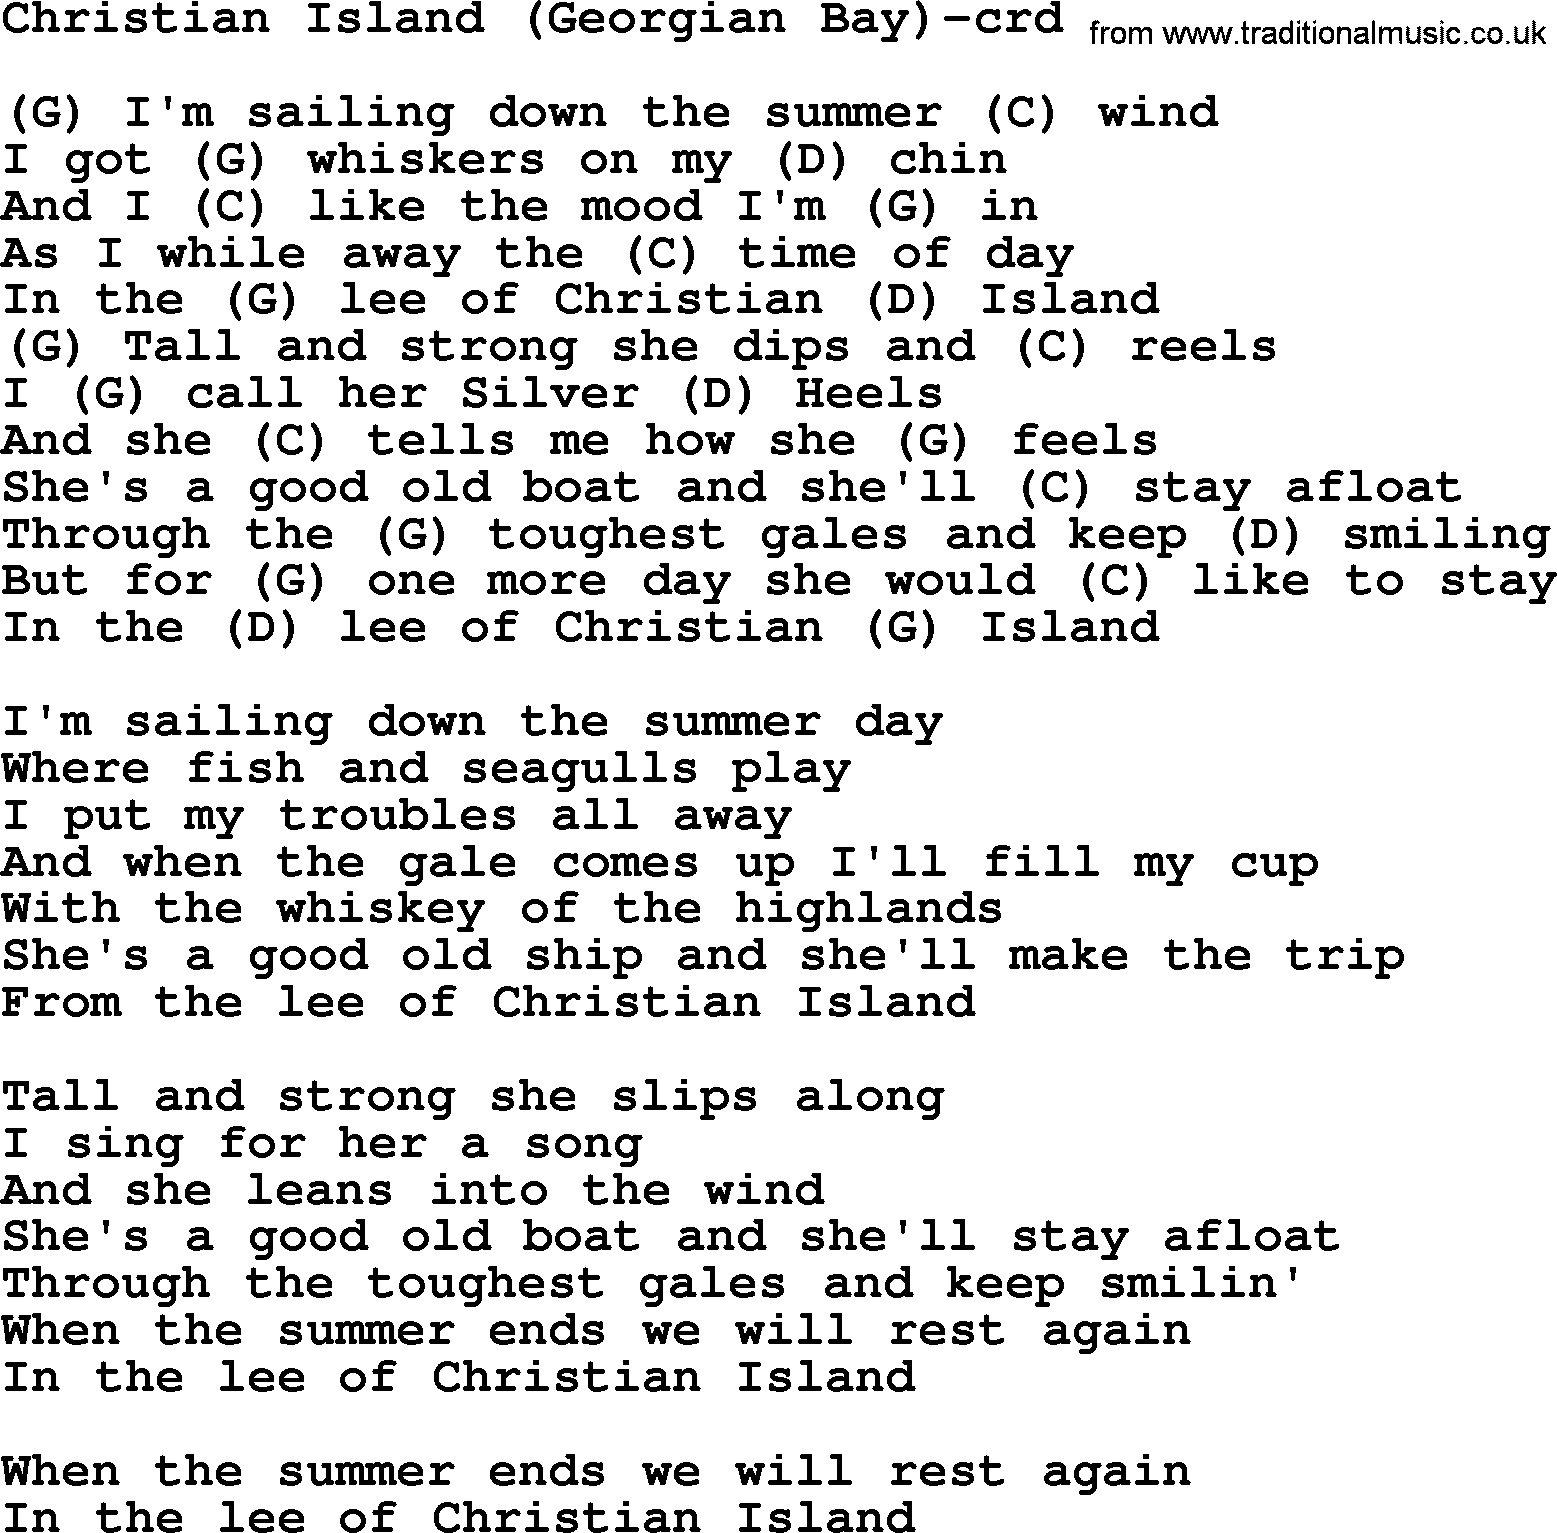 Gordon Lightfoot song Christian Island (Georgian Bay), lyrics and chords